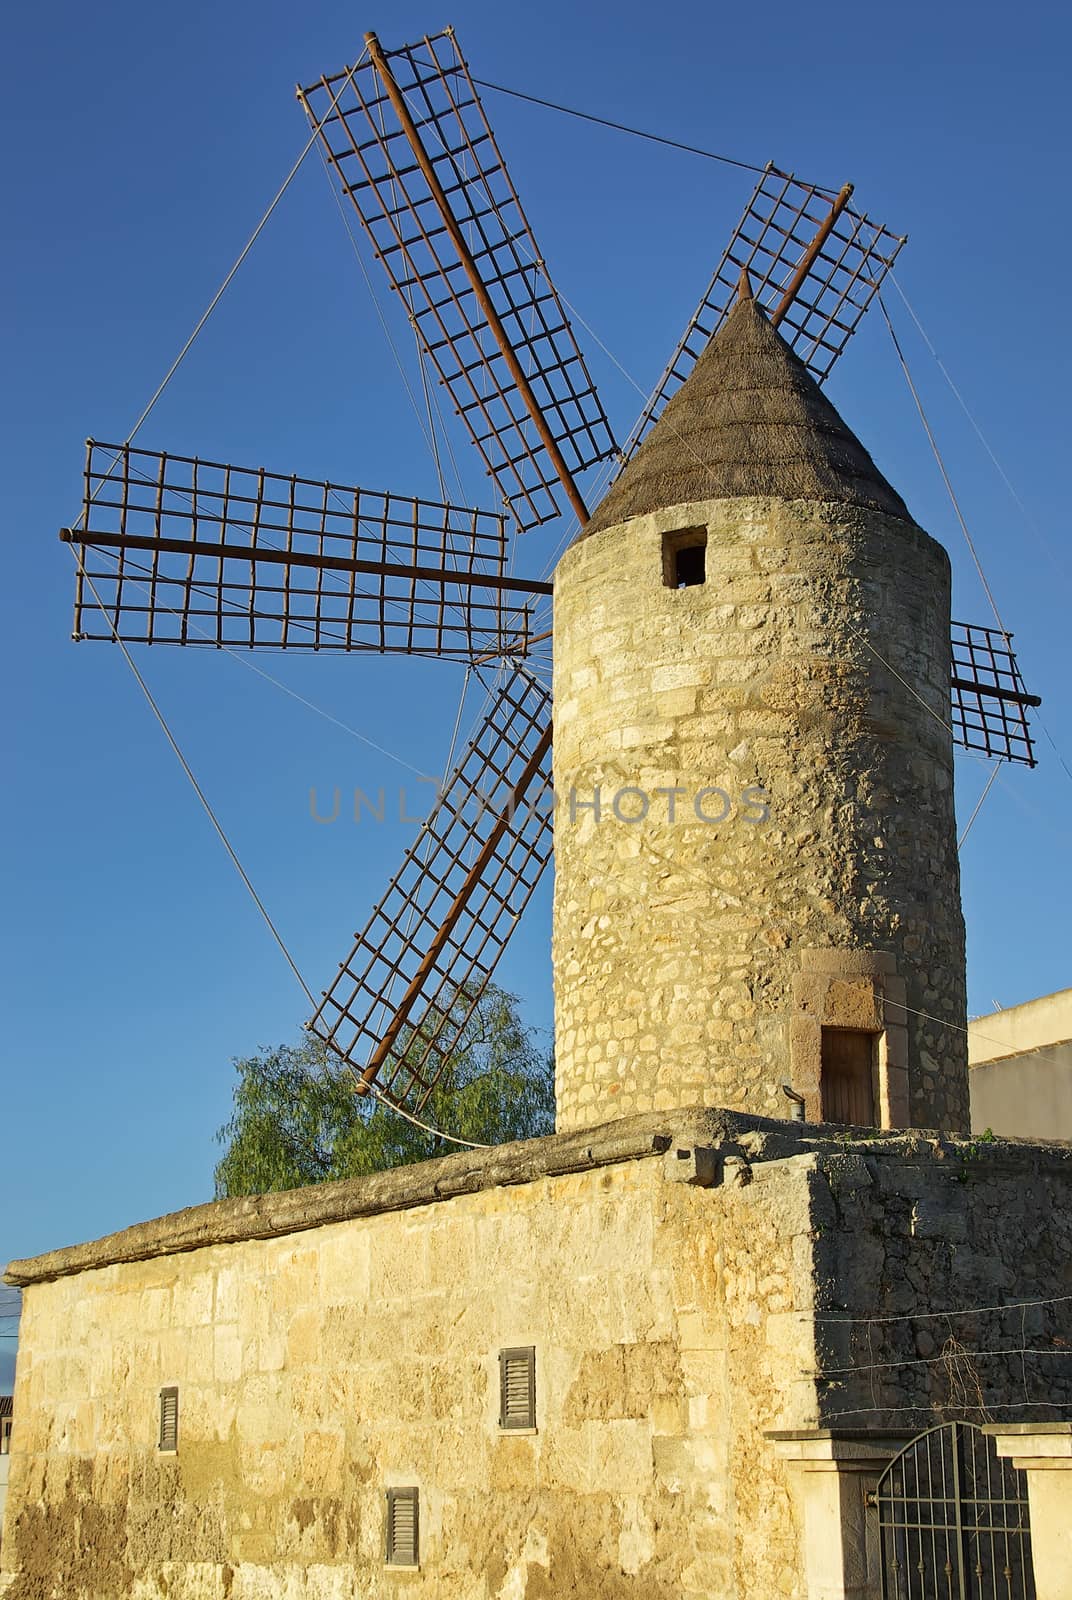 Ancient Windmill by JCVSTOCK